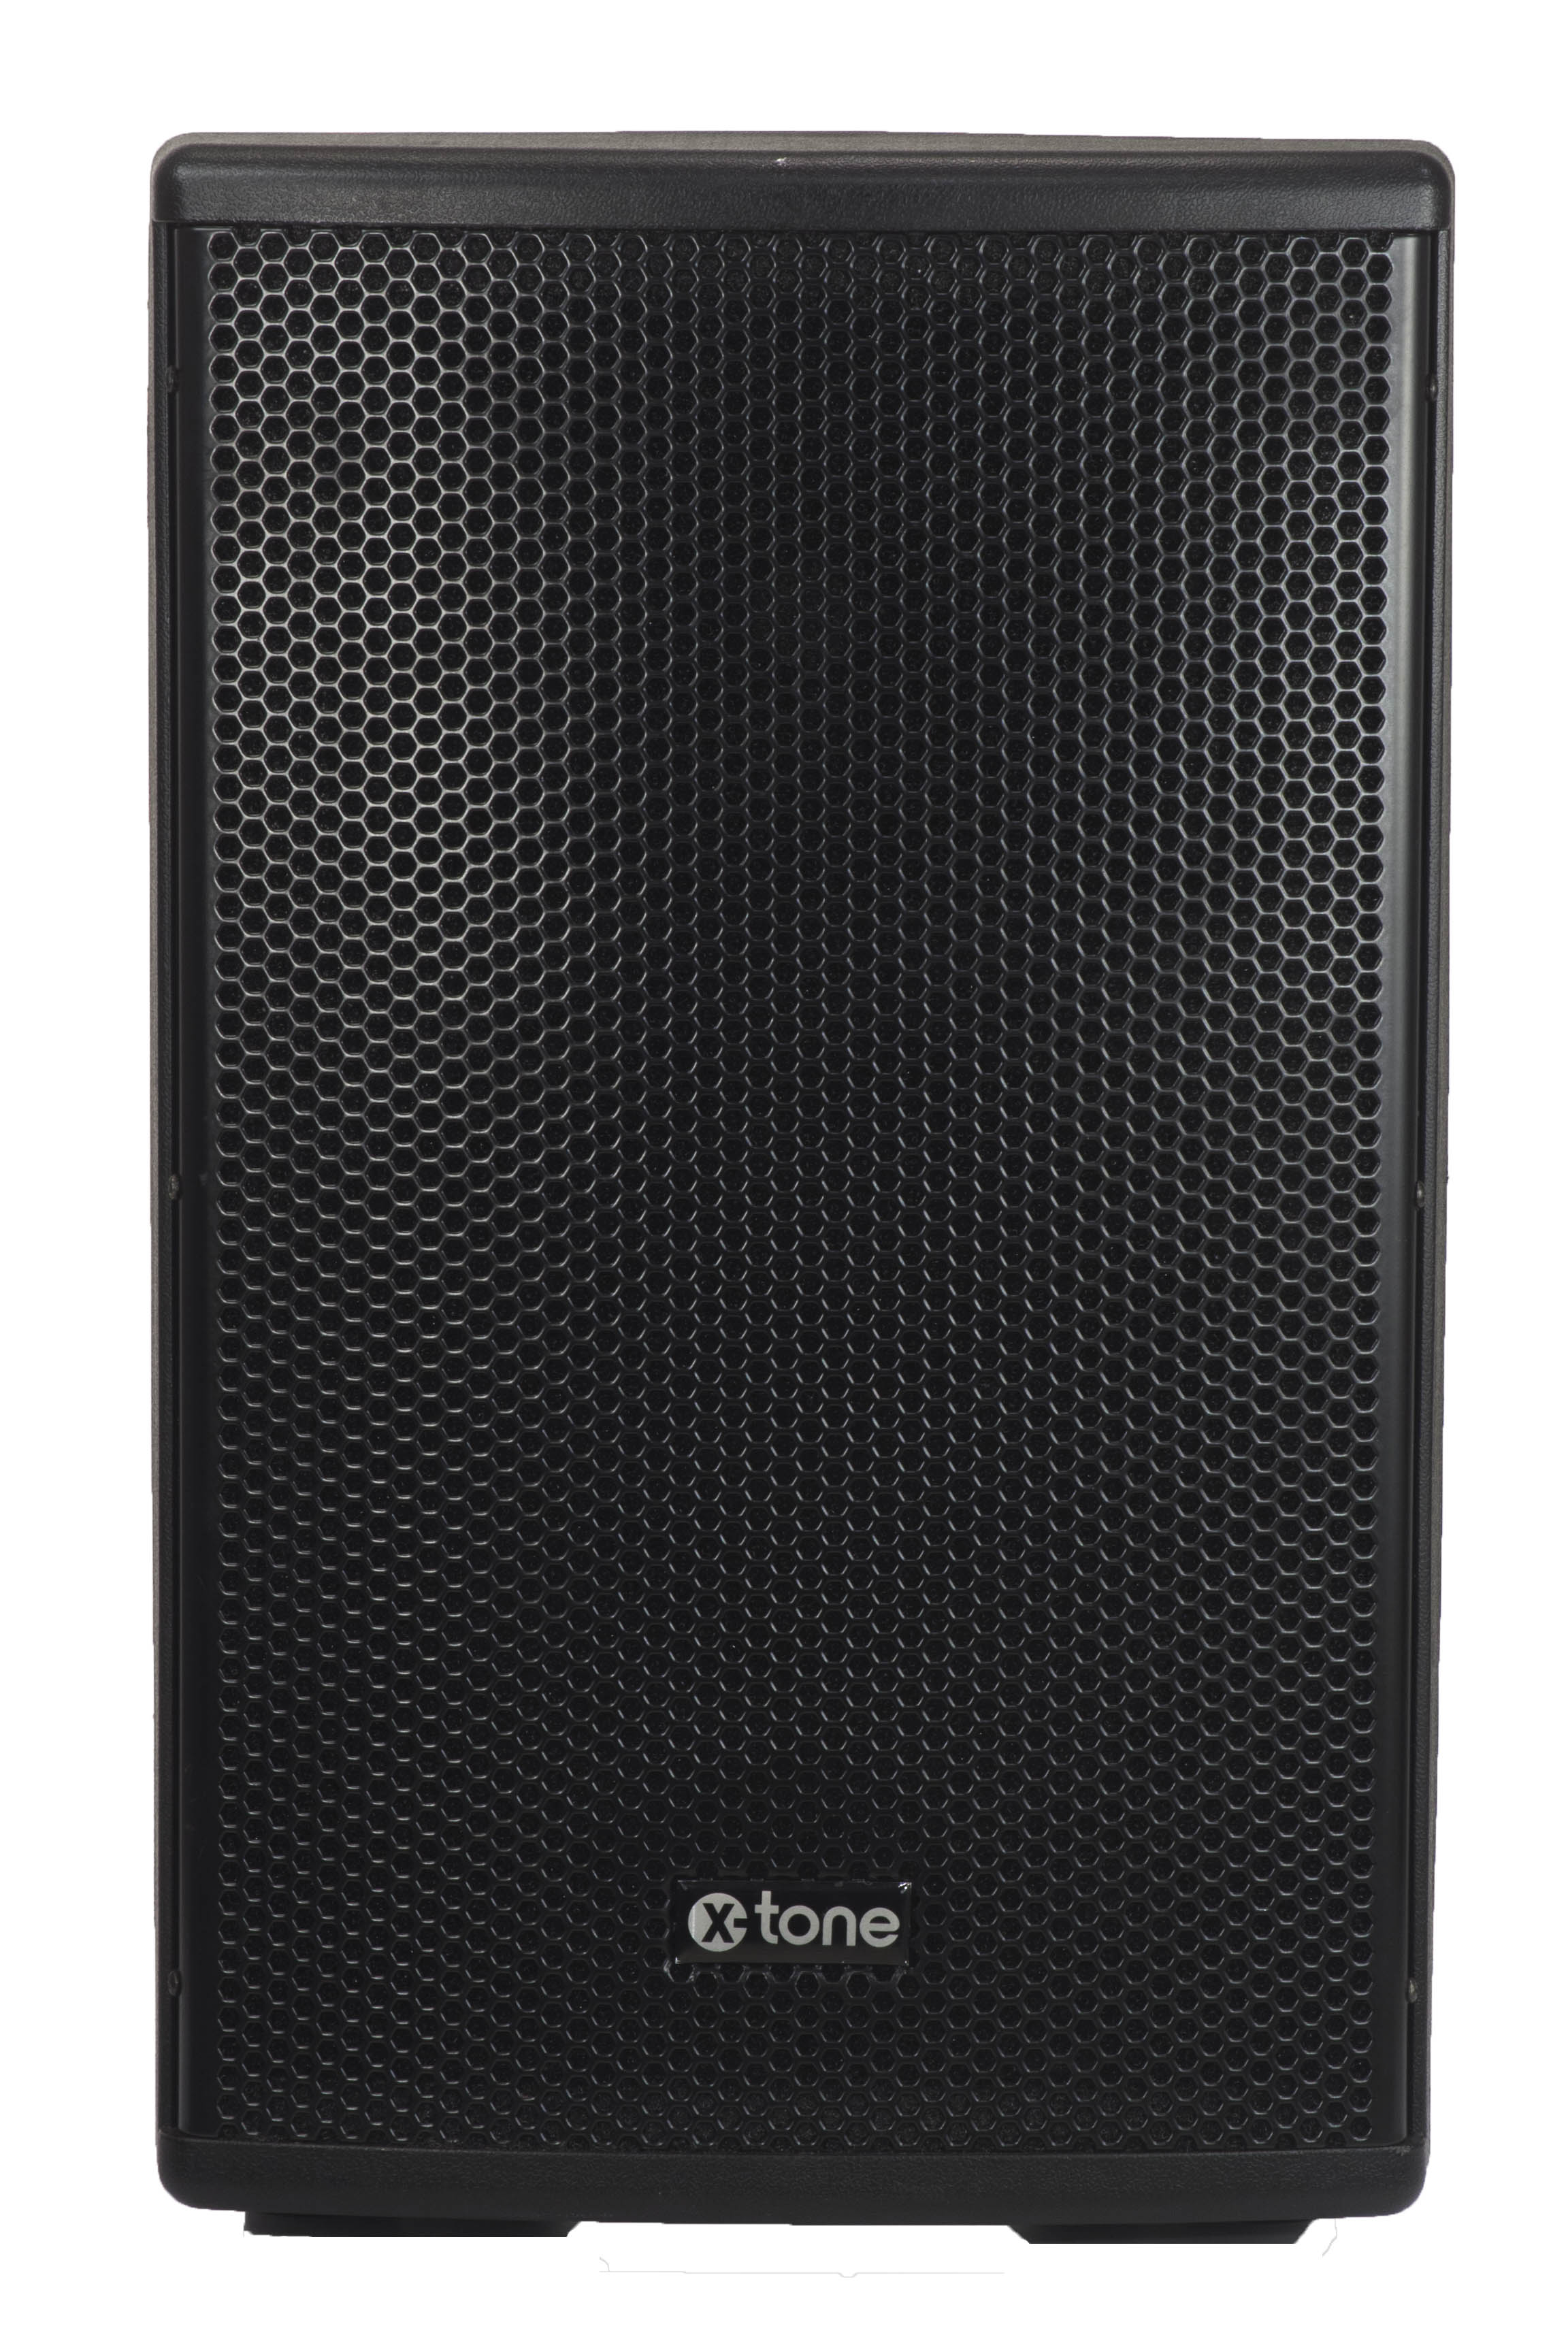 X-tone Xts-10 - Actieve luidspreker - Variation 1